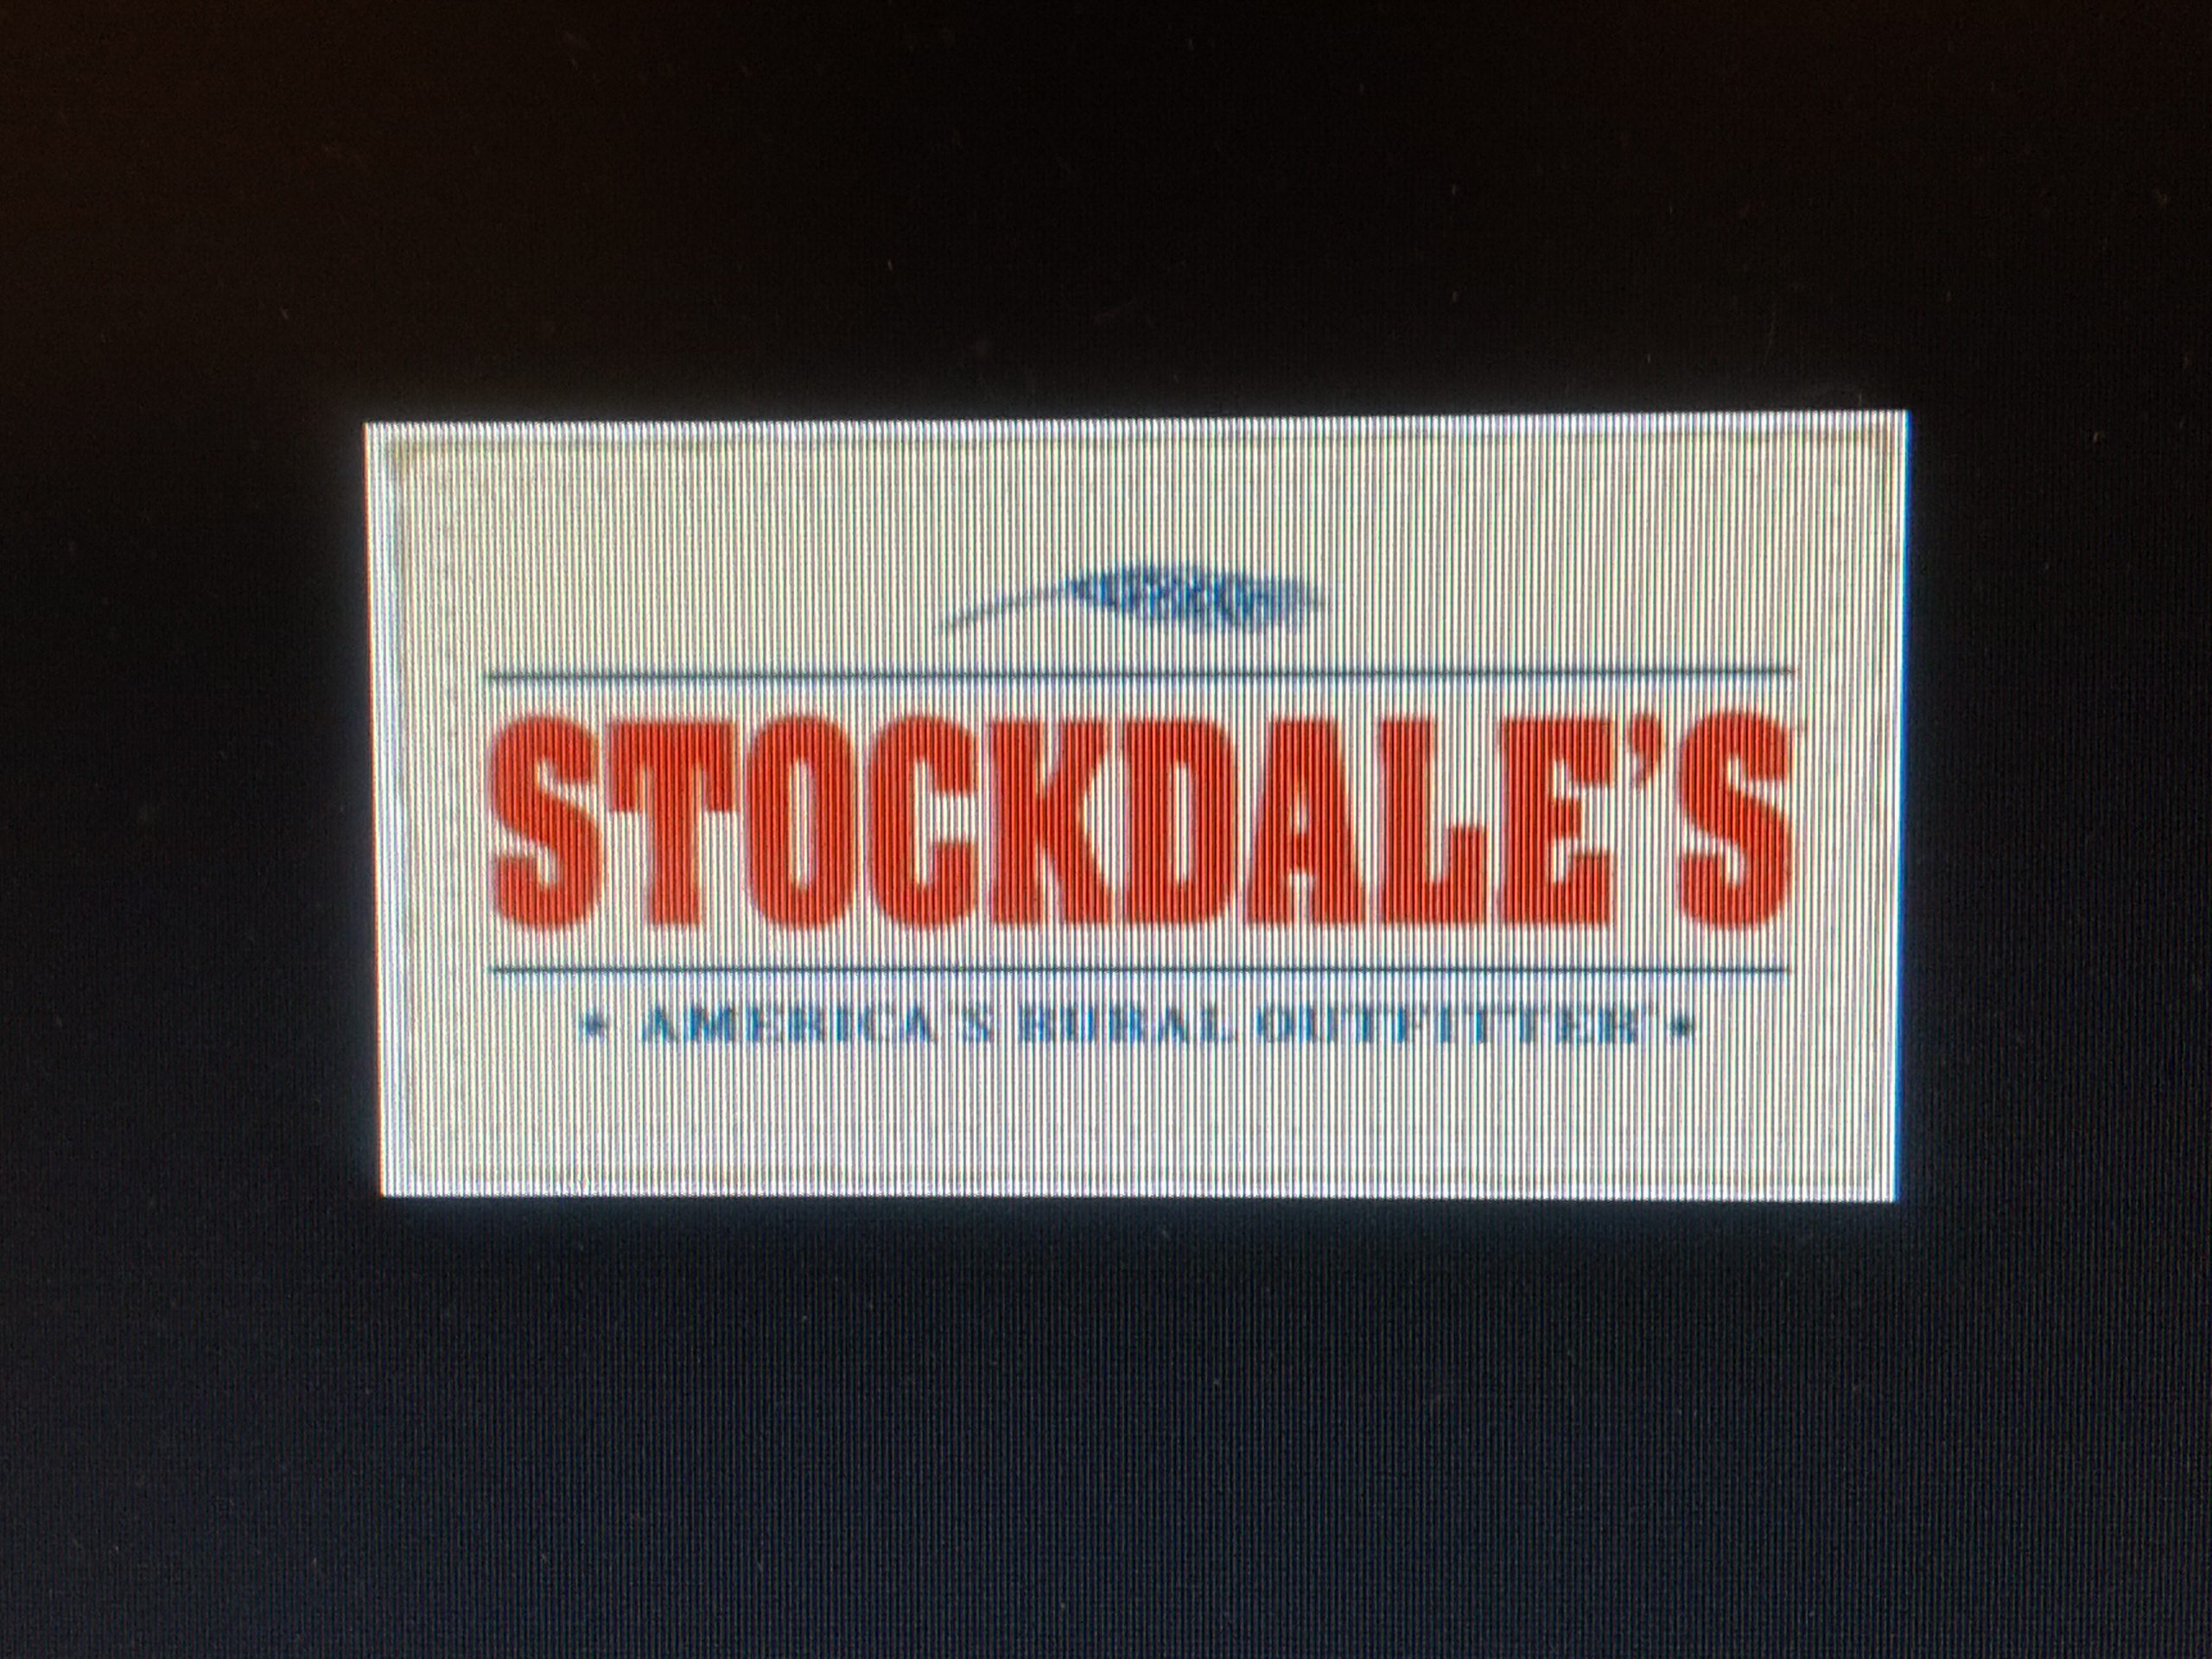 Stockdale's Compliance Visit